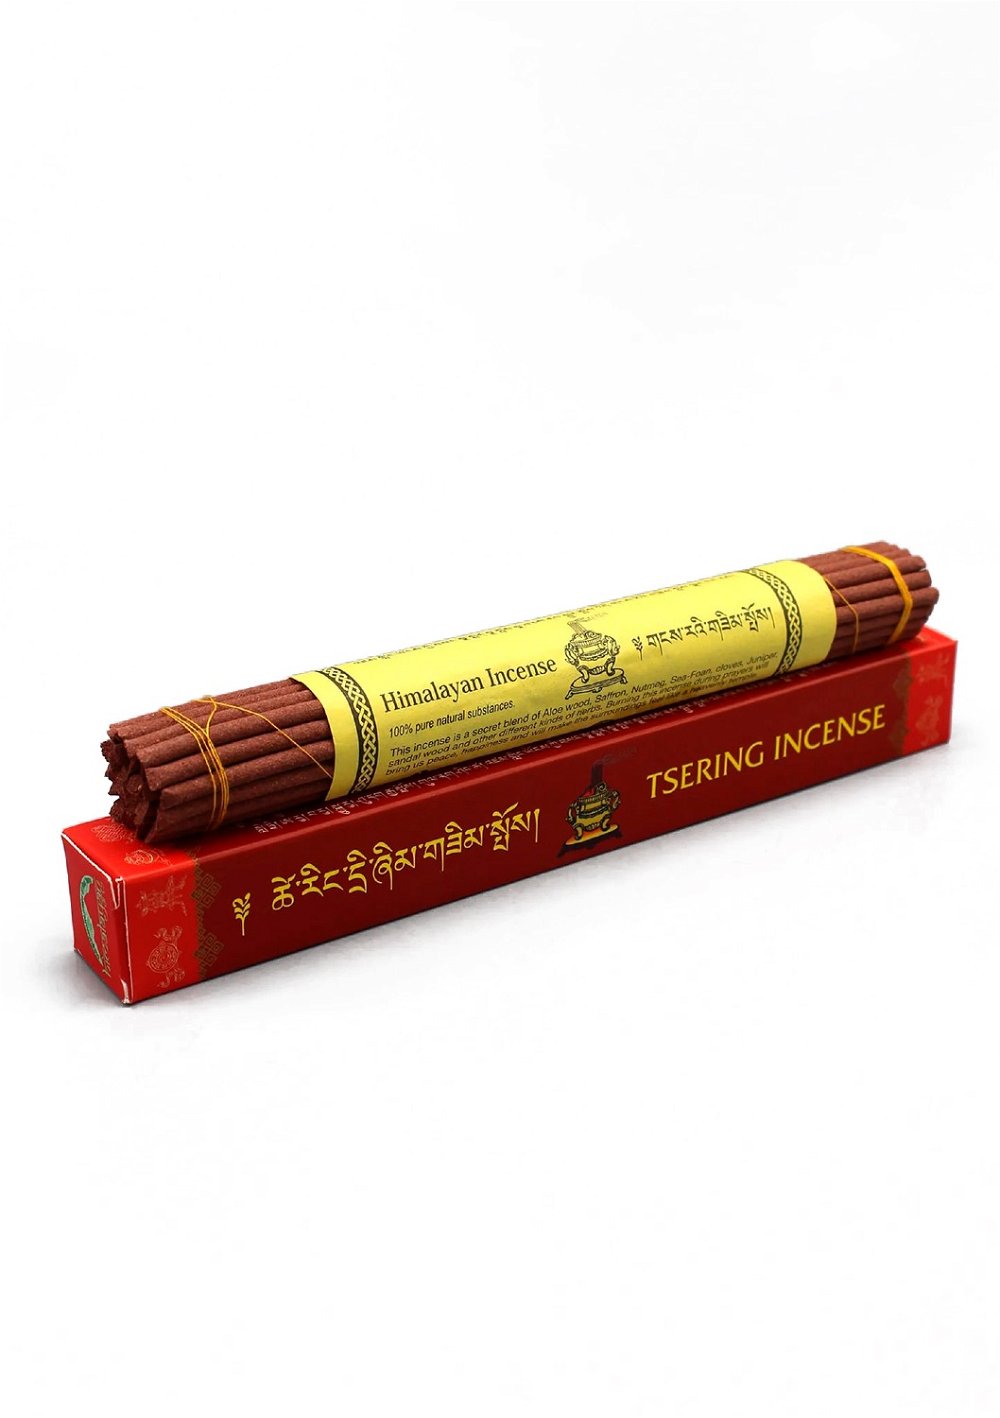 Благовоние Tsering Incense (Церингма), красная упаковка, 30 палочек по 21,5 см, 30, Tsering, красная упаковка